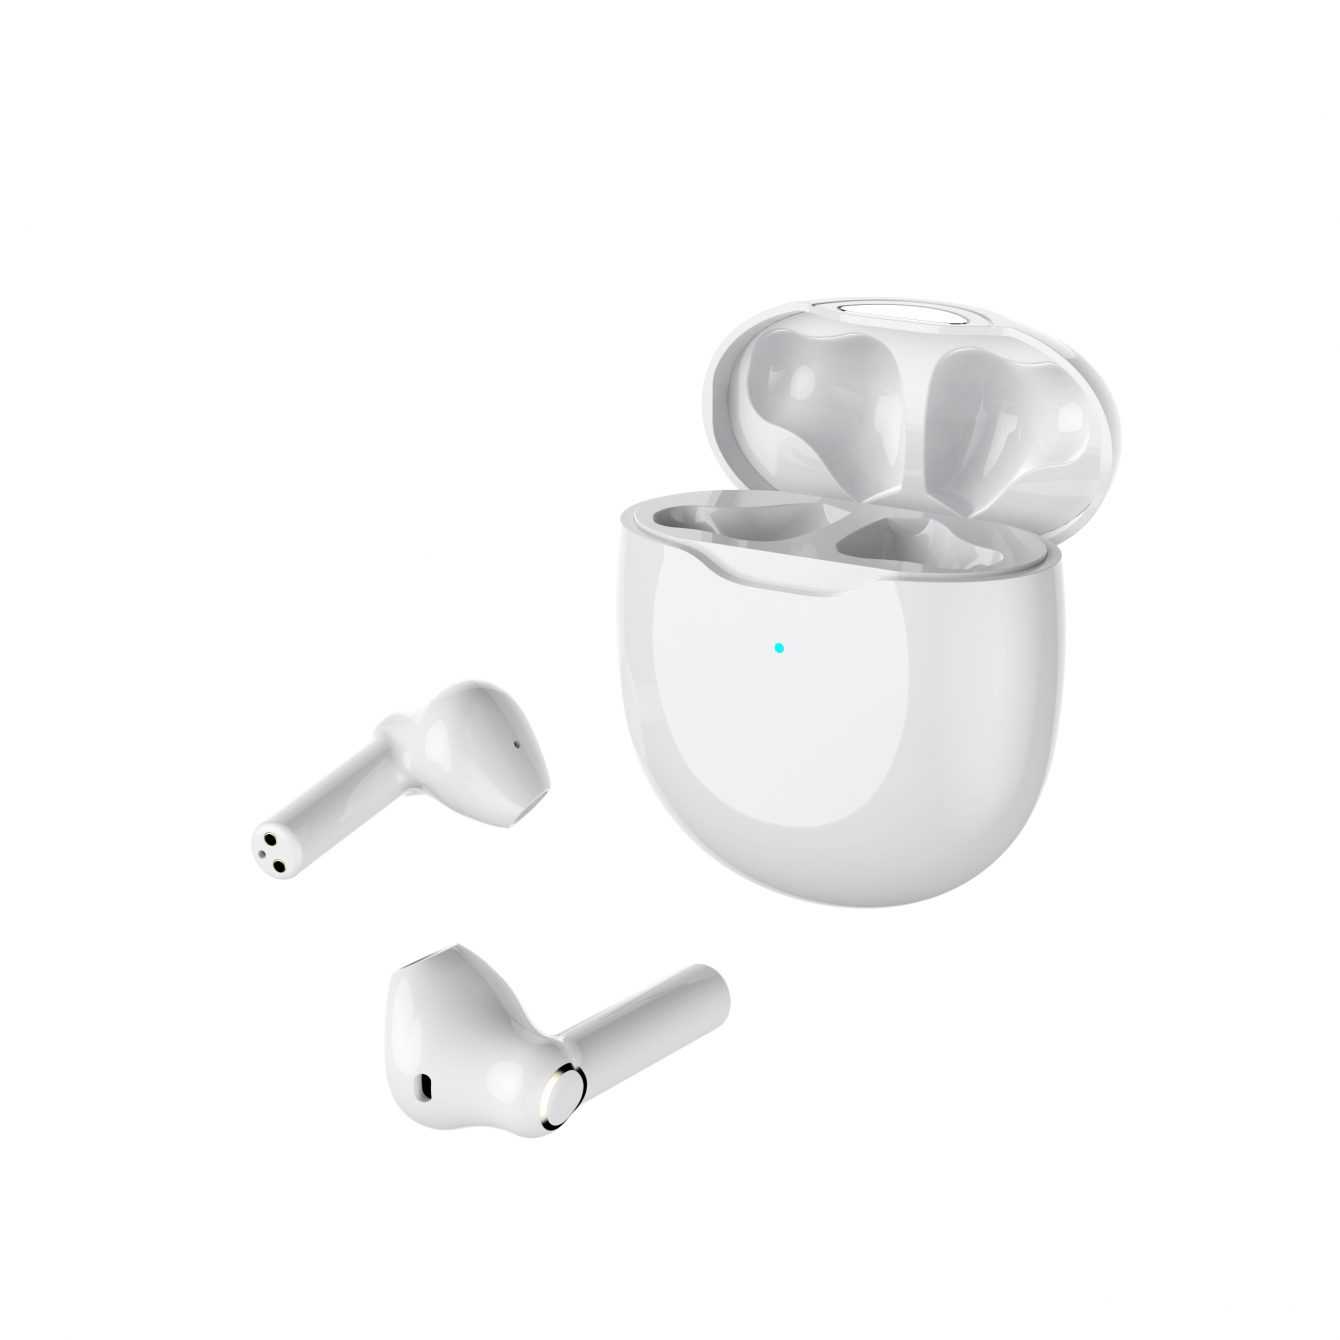 MySound Sphere Pods: here are the new true wireless earphones